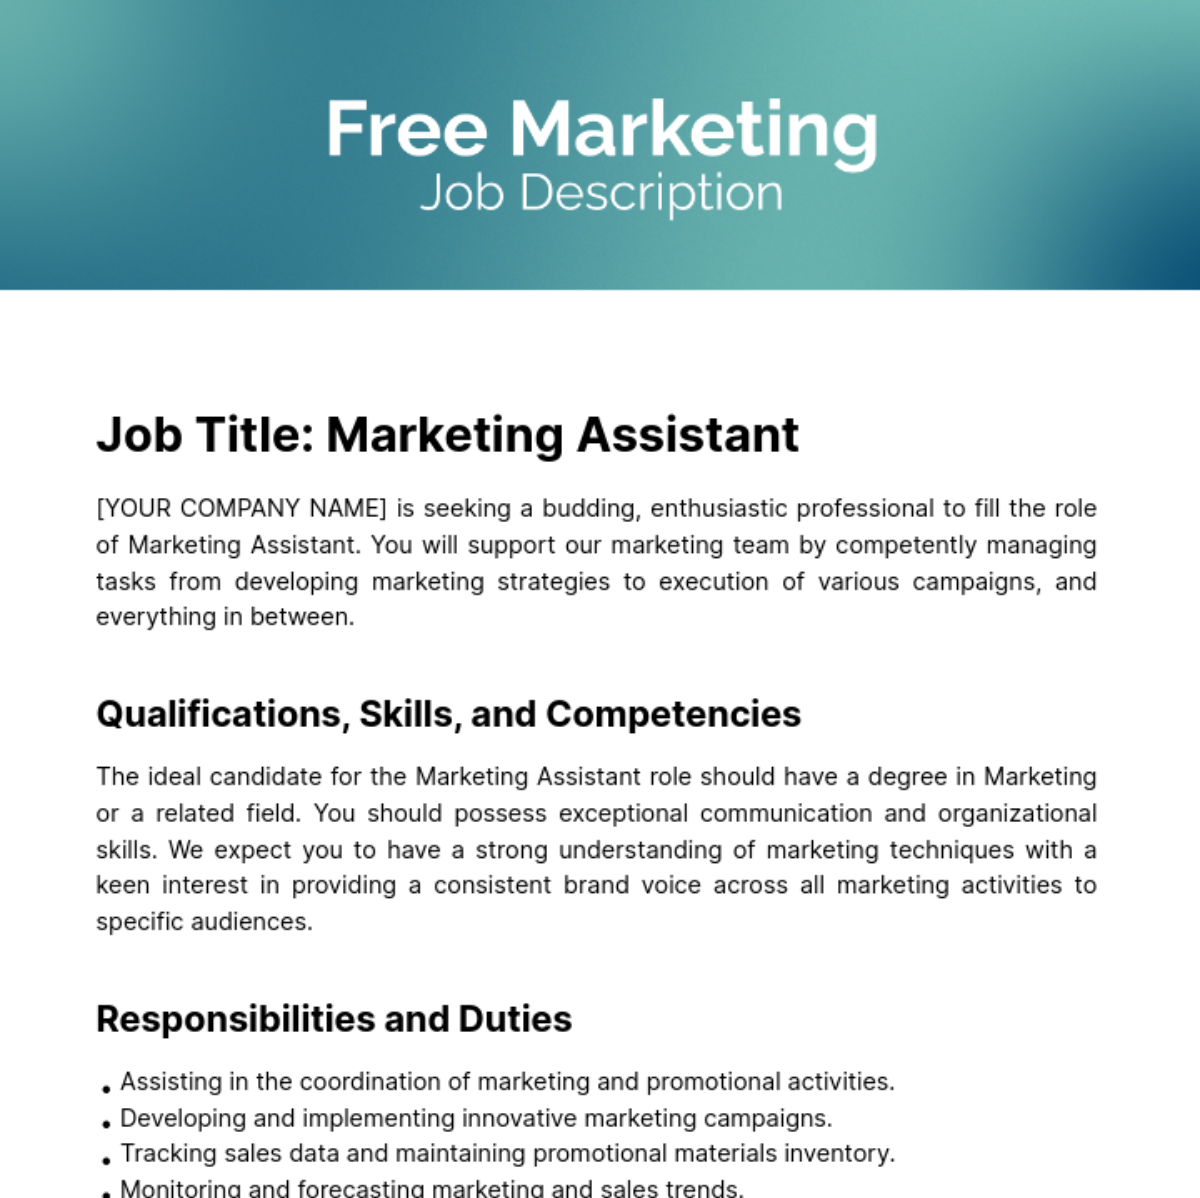 Marketing Job Description Template